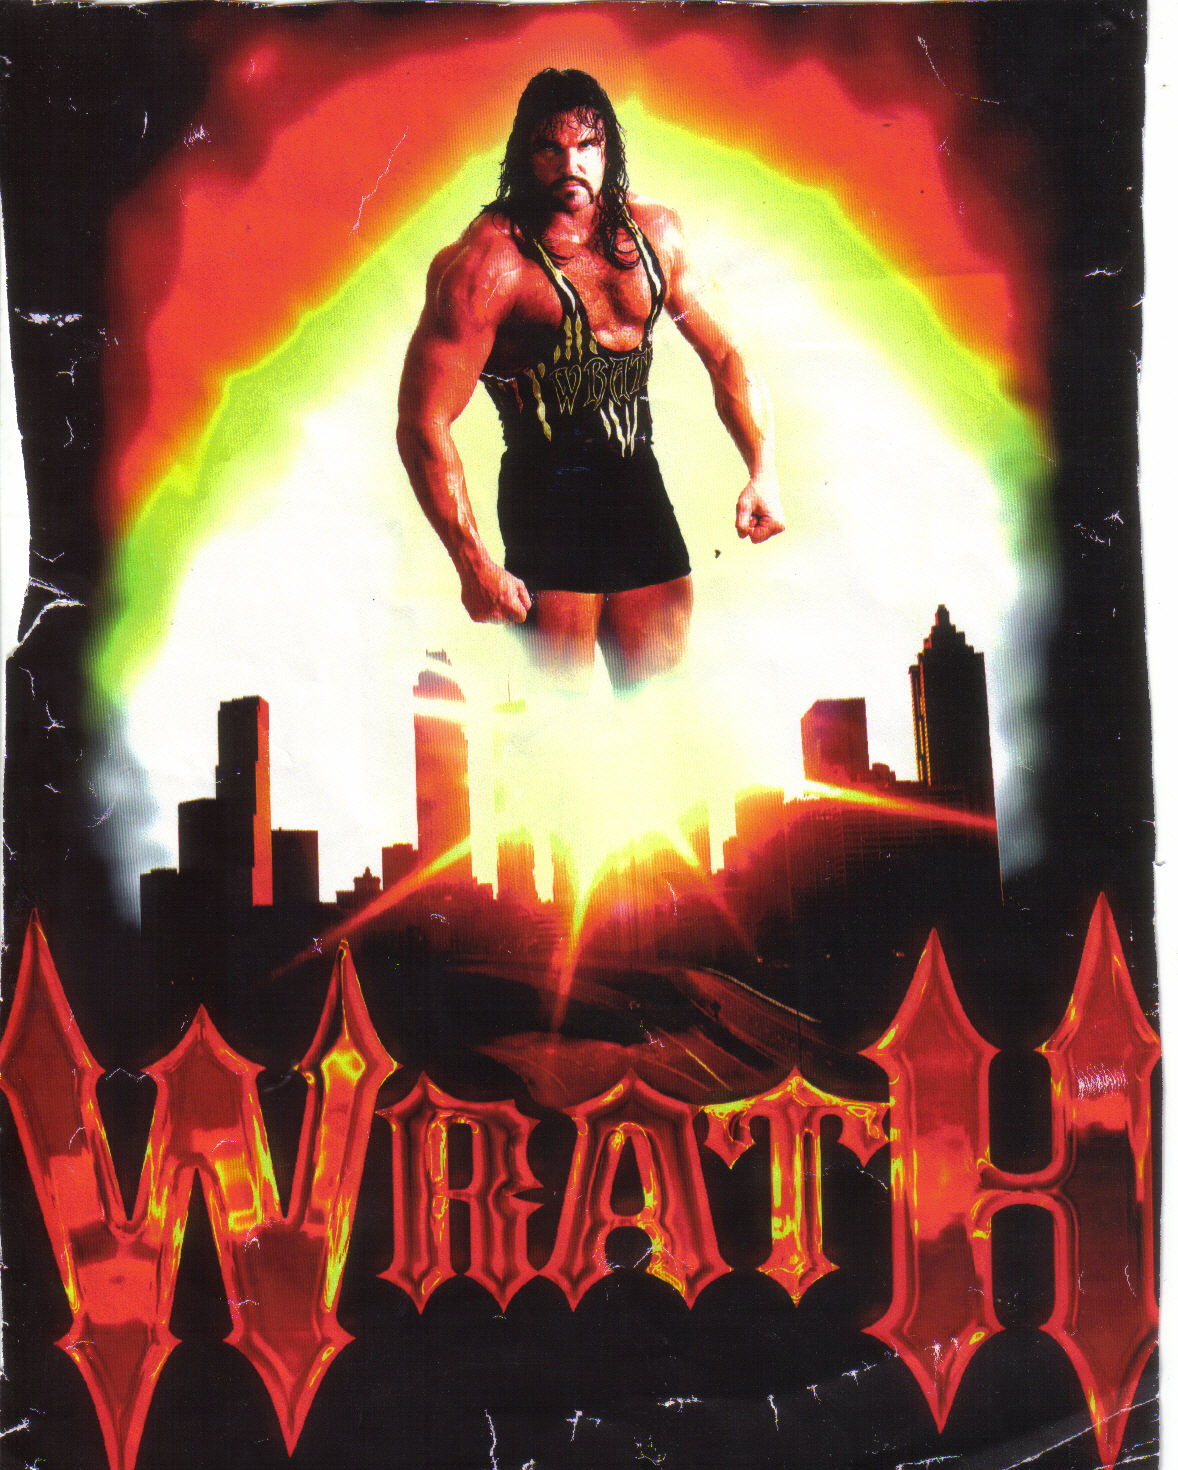 Bryan E Clark II as Wrath/WCW